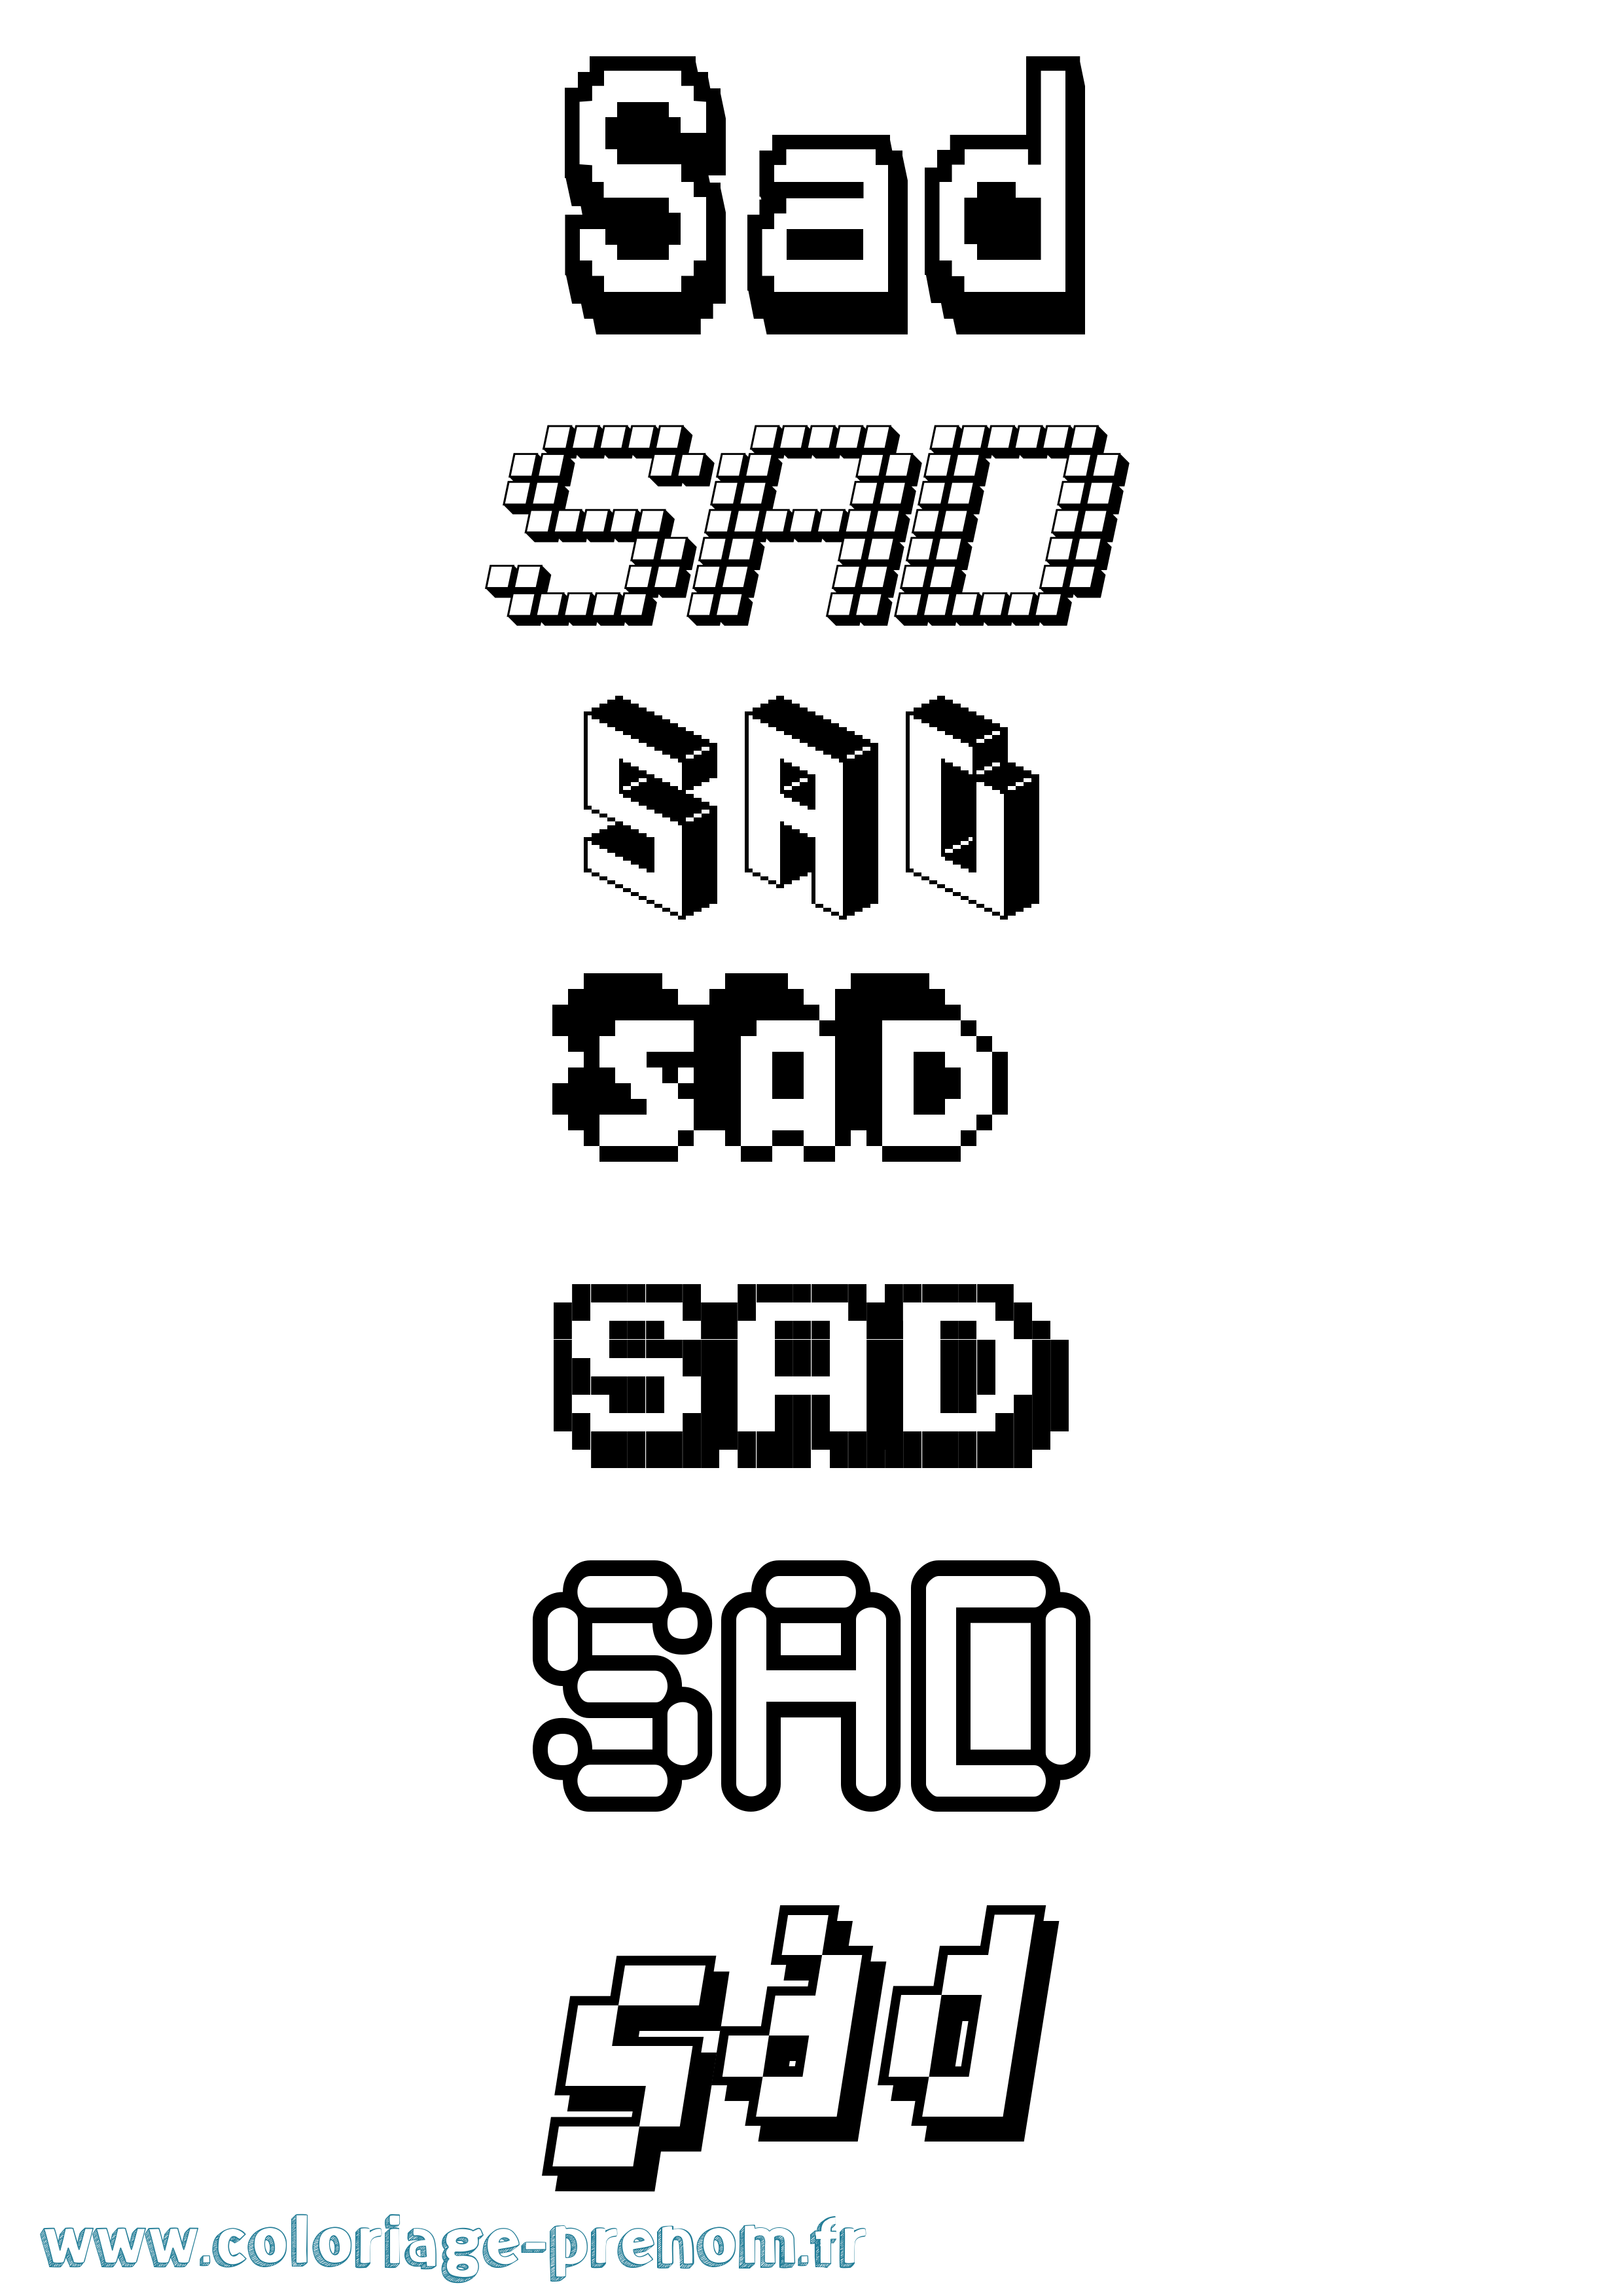 Coloriage prénom Sad Pixel